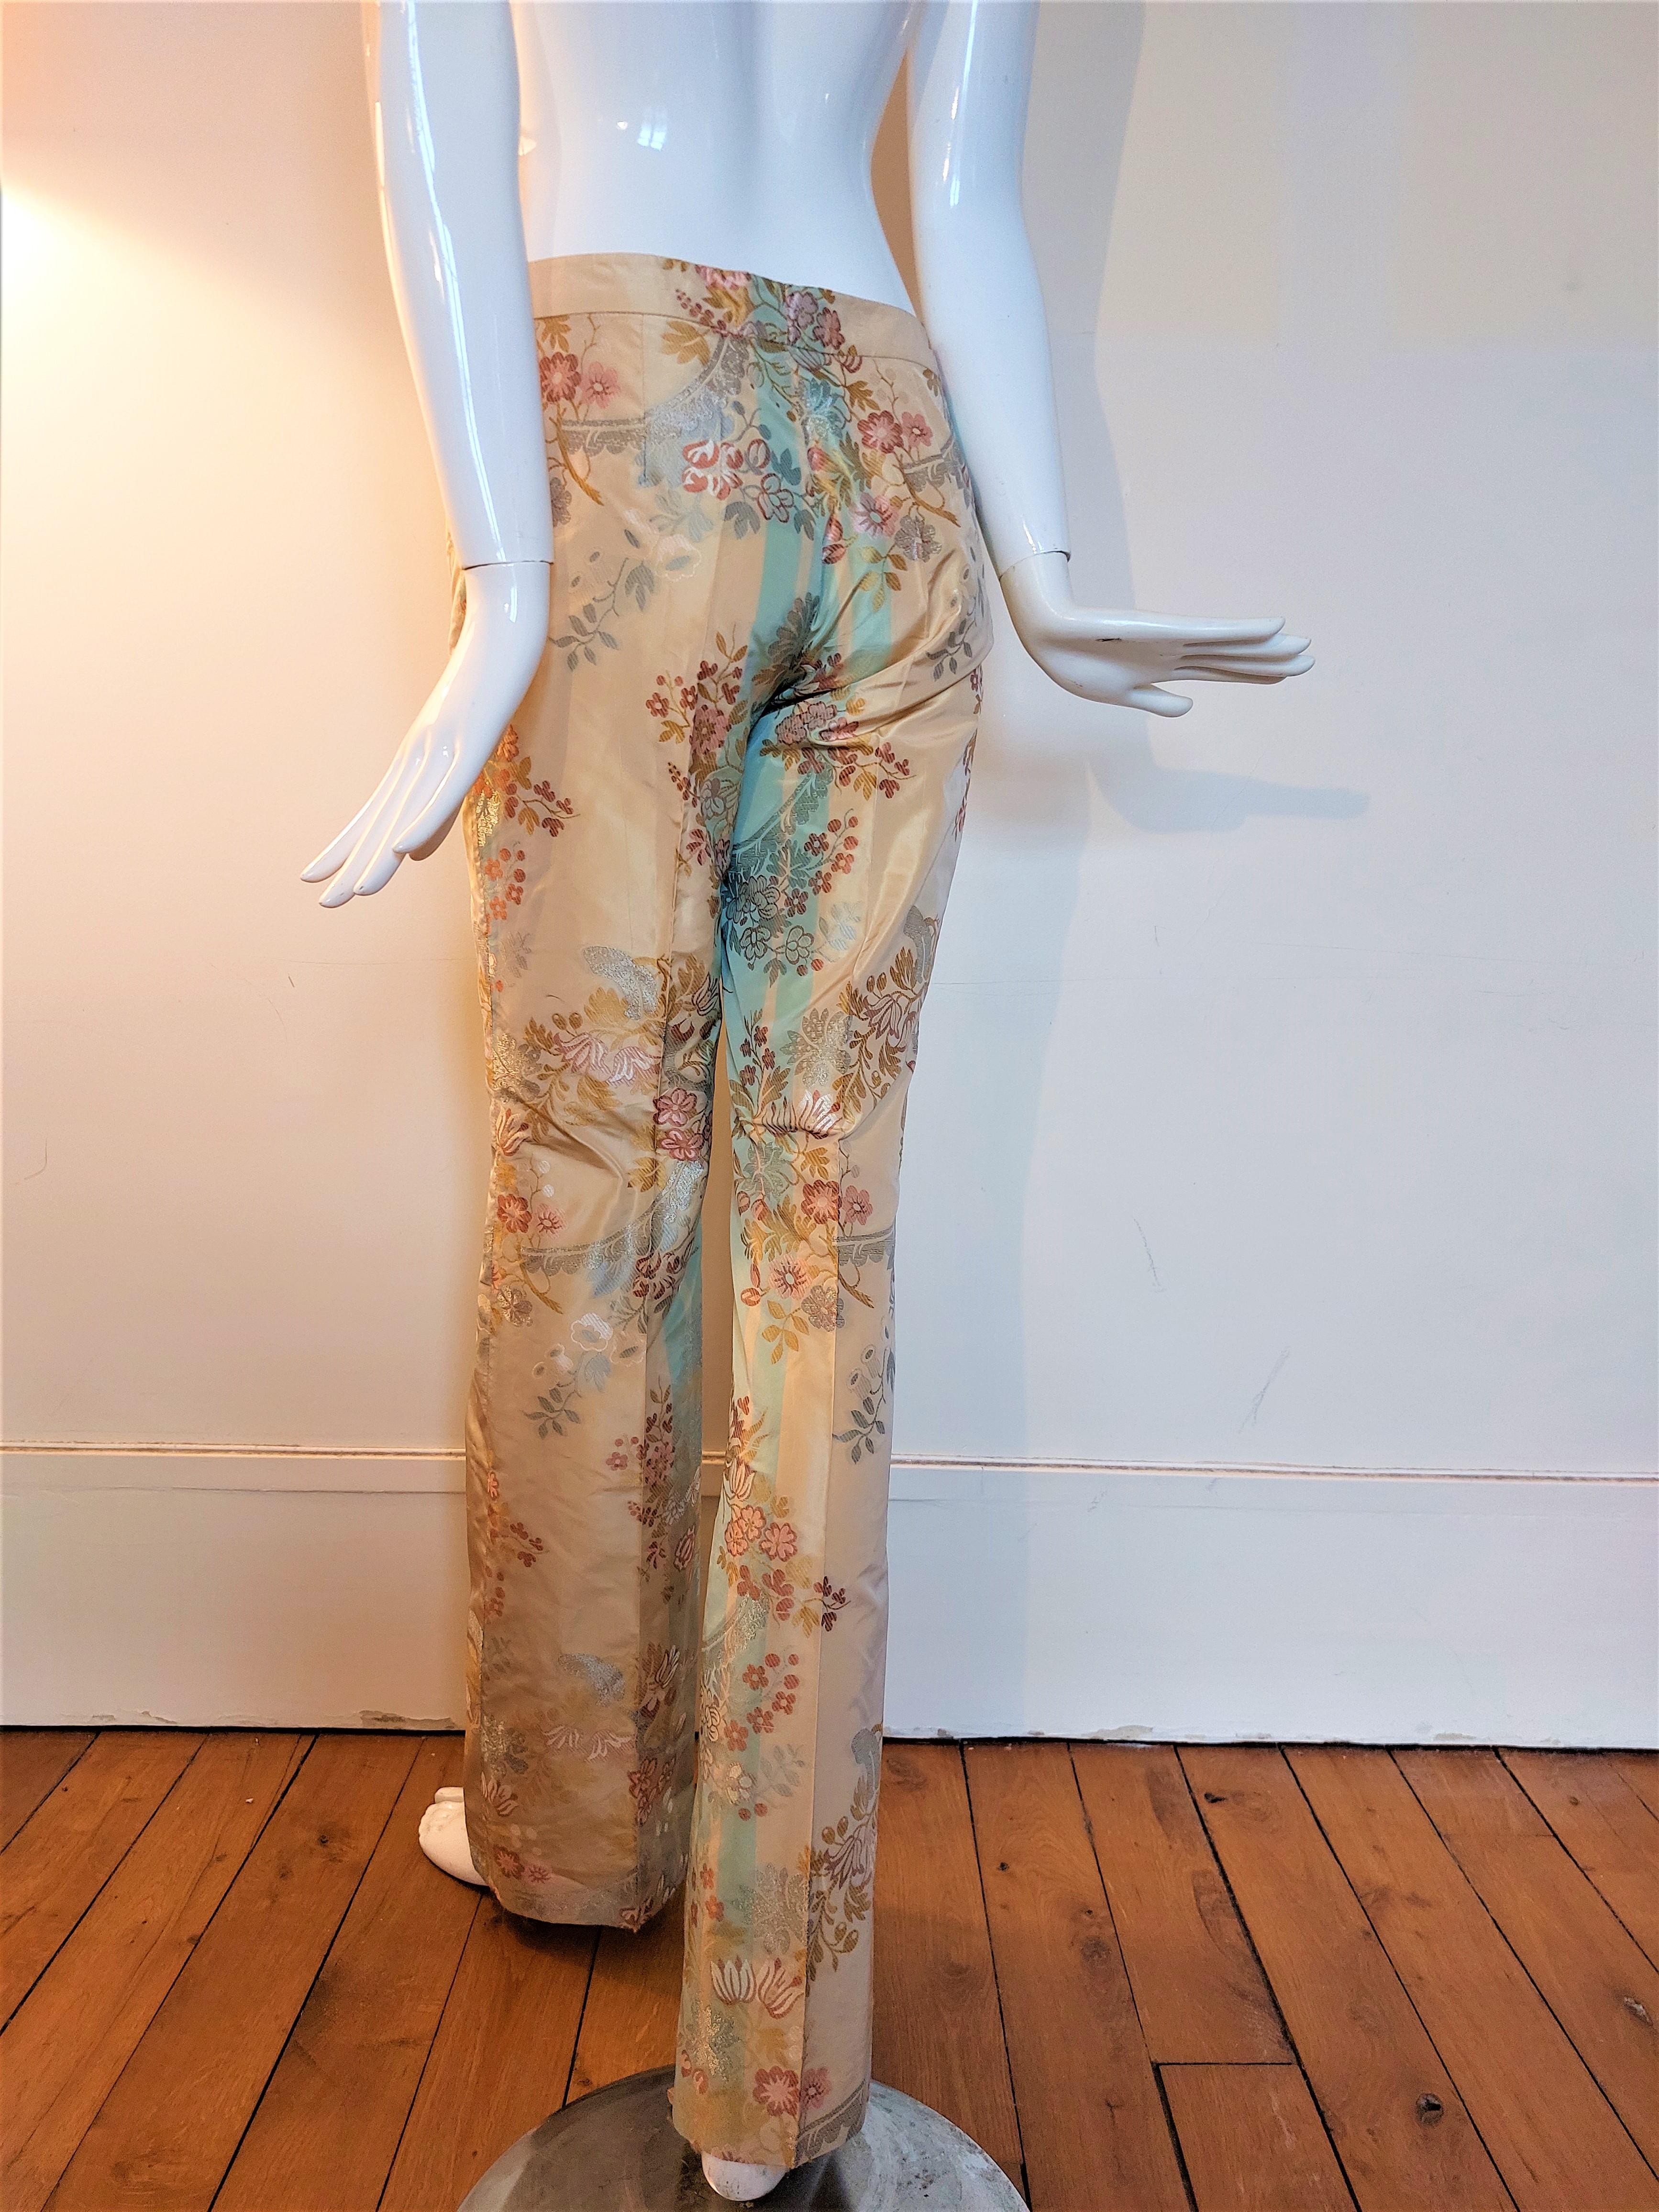 Alexander Mcqueen - Costume pantalon de pirate en brocart de soie « Shipwreck », années 2000 en vente 14